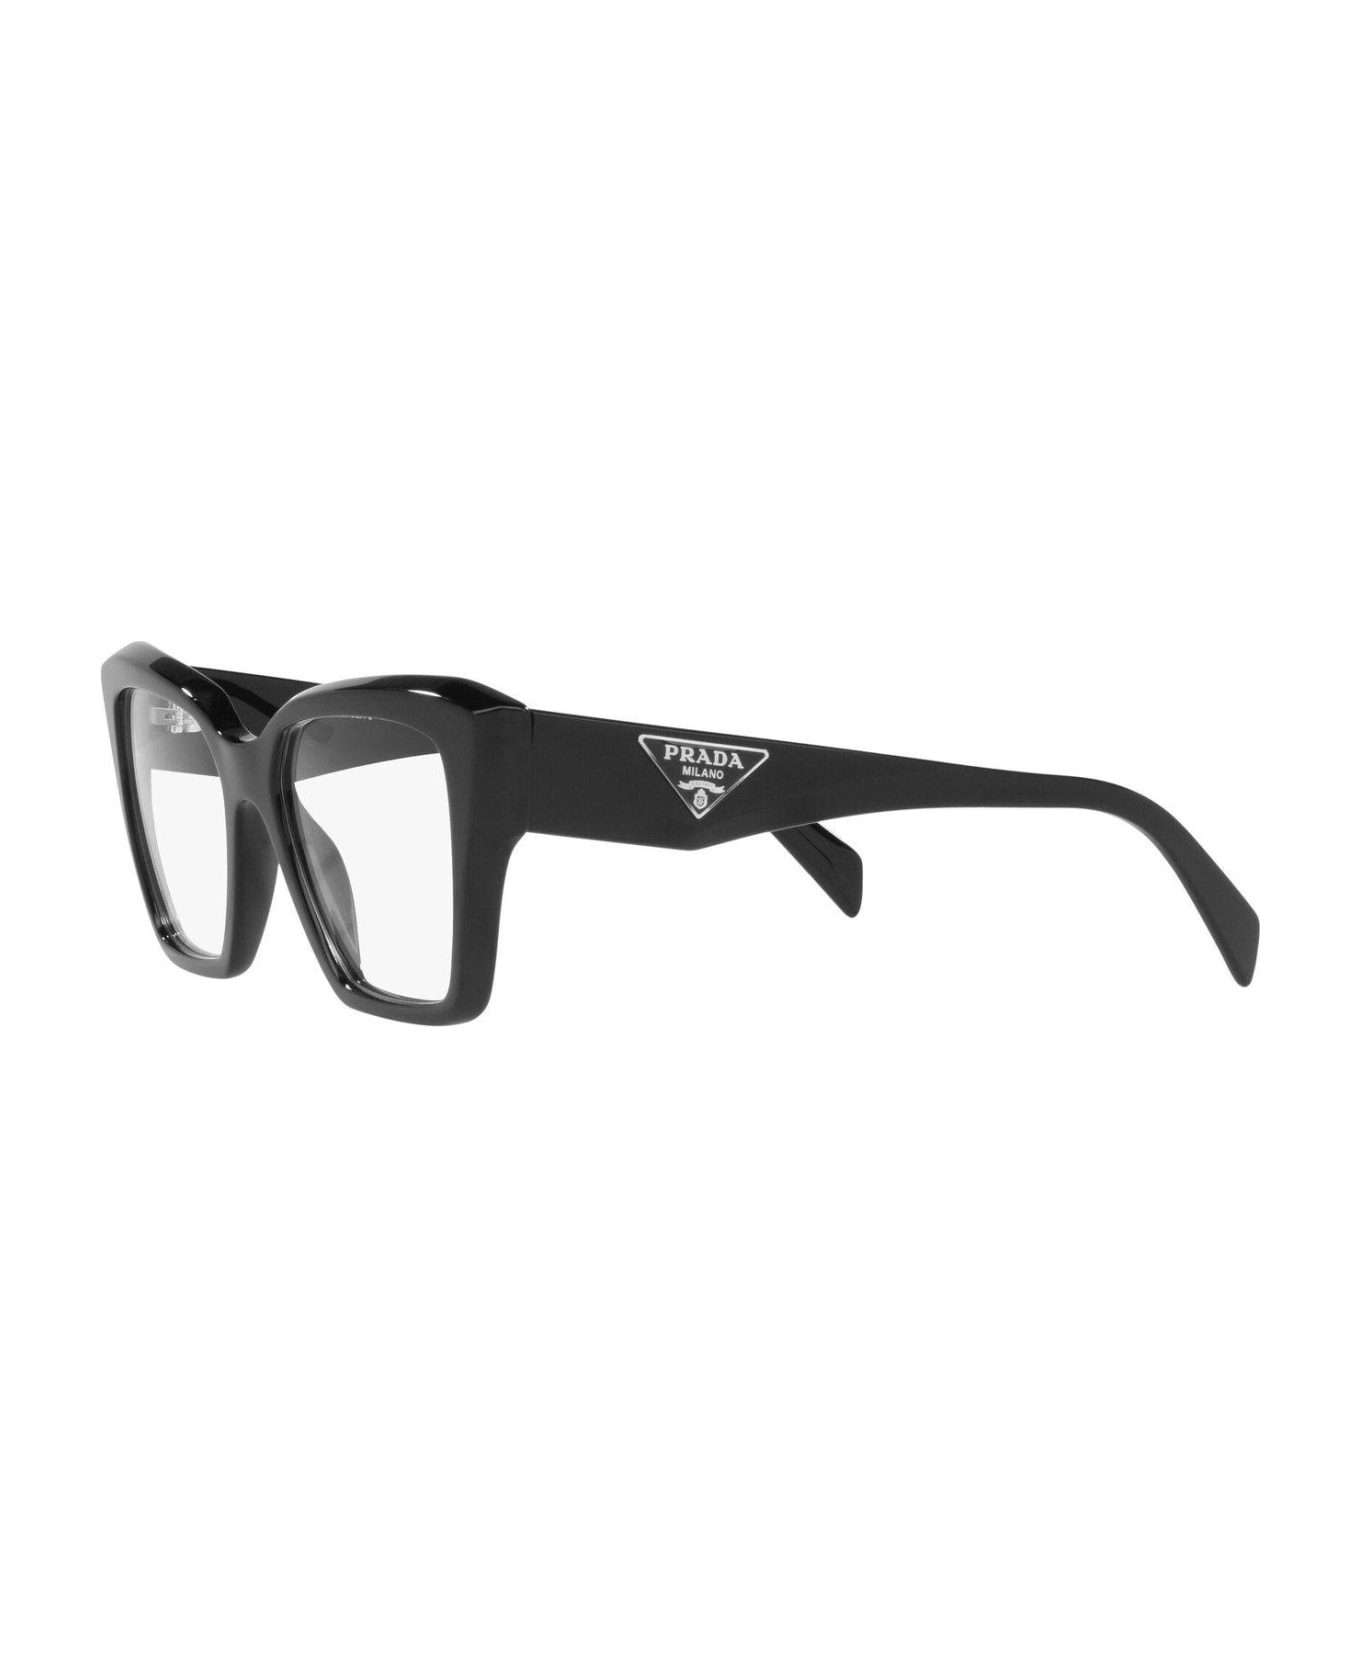 Prada Eyewear Square Frame Glasses - 1AB1O1